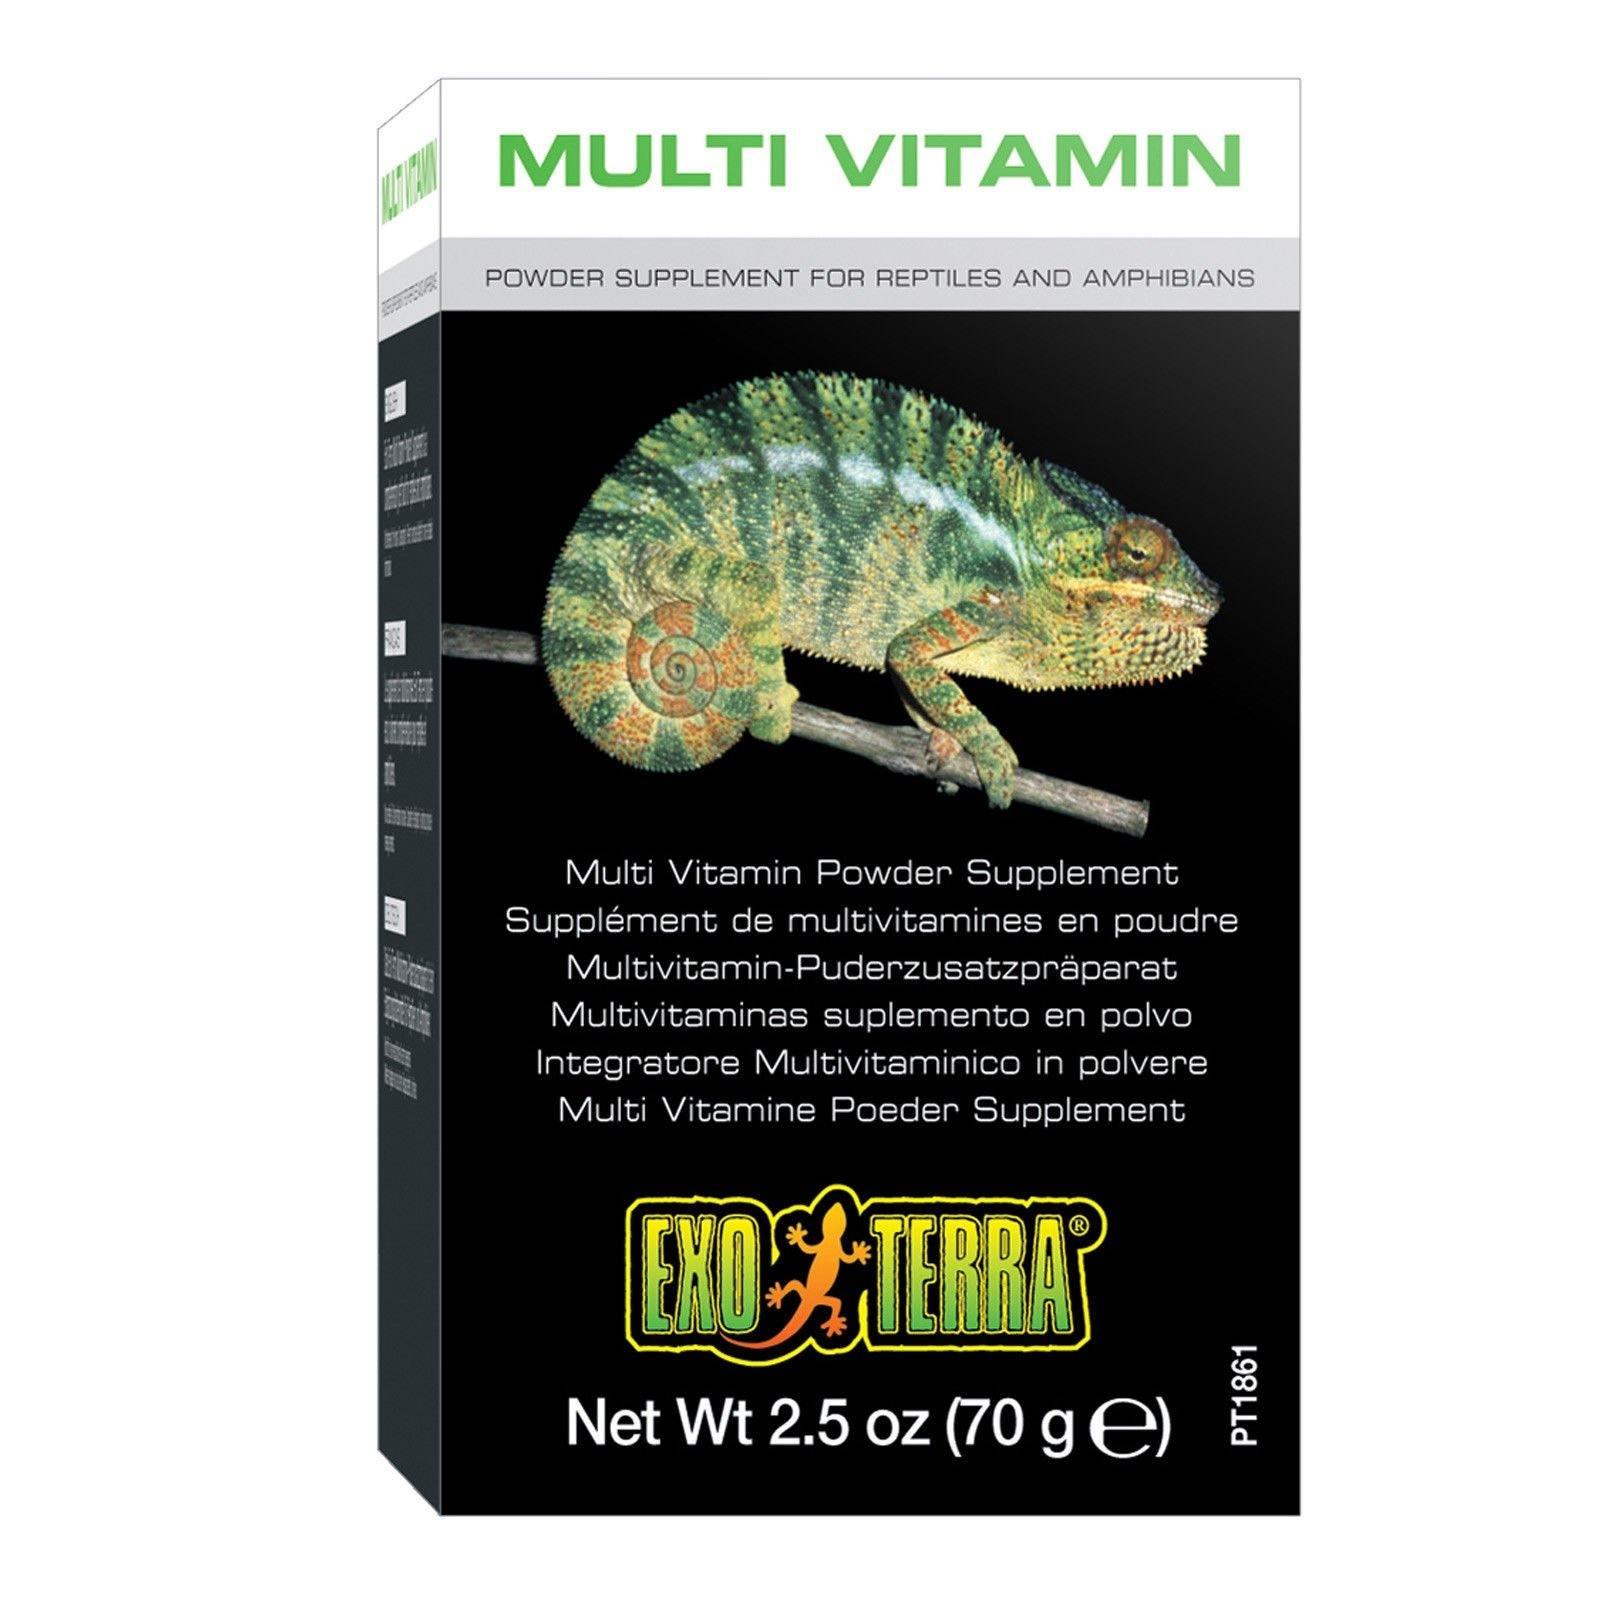 Exo Terra Multi Vitamin Powder Supplement 70g